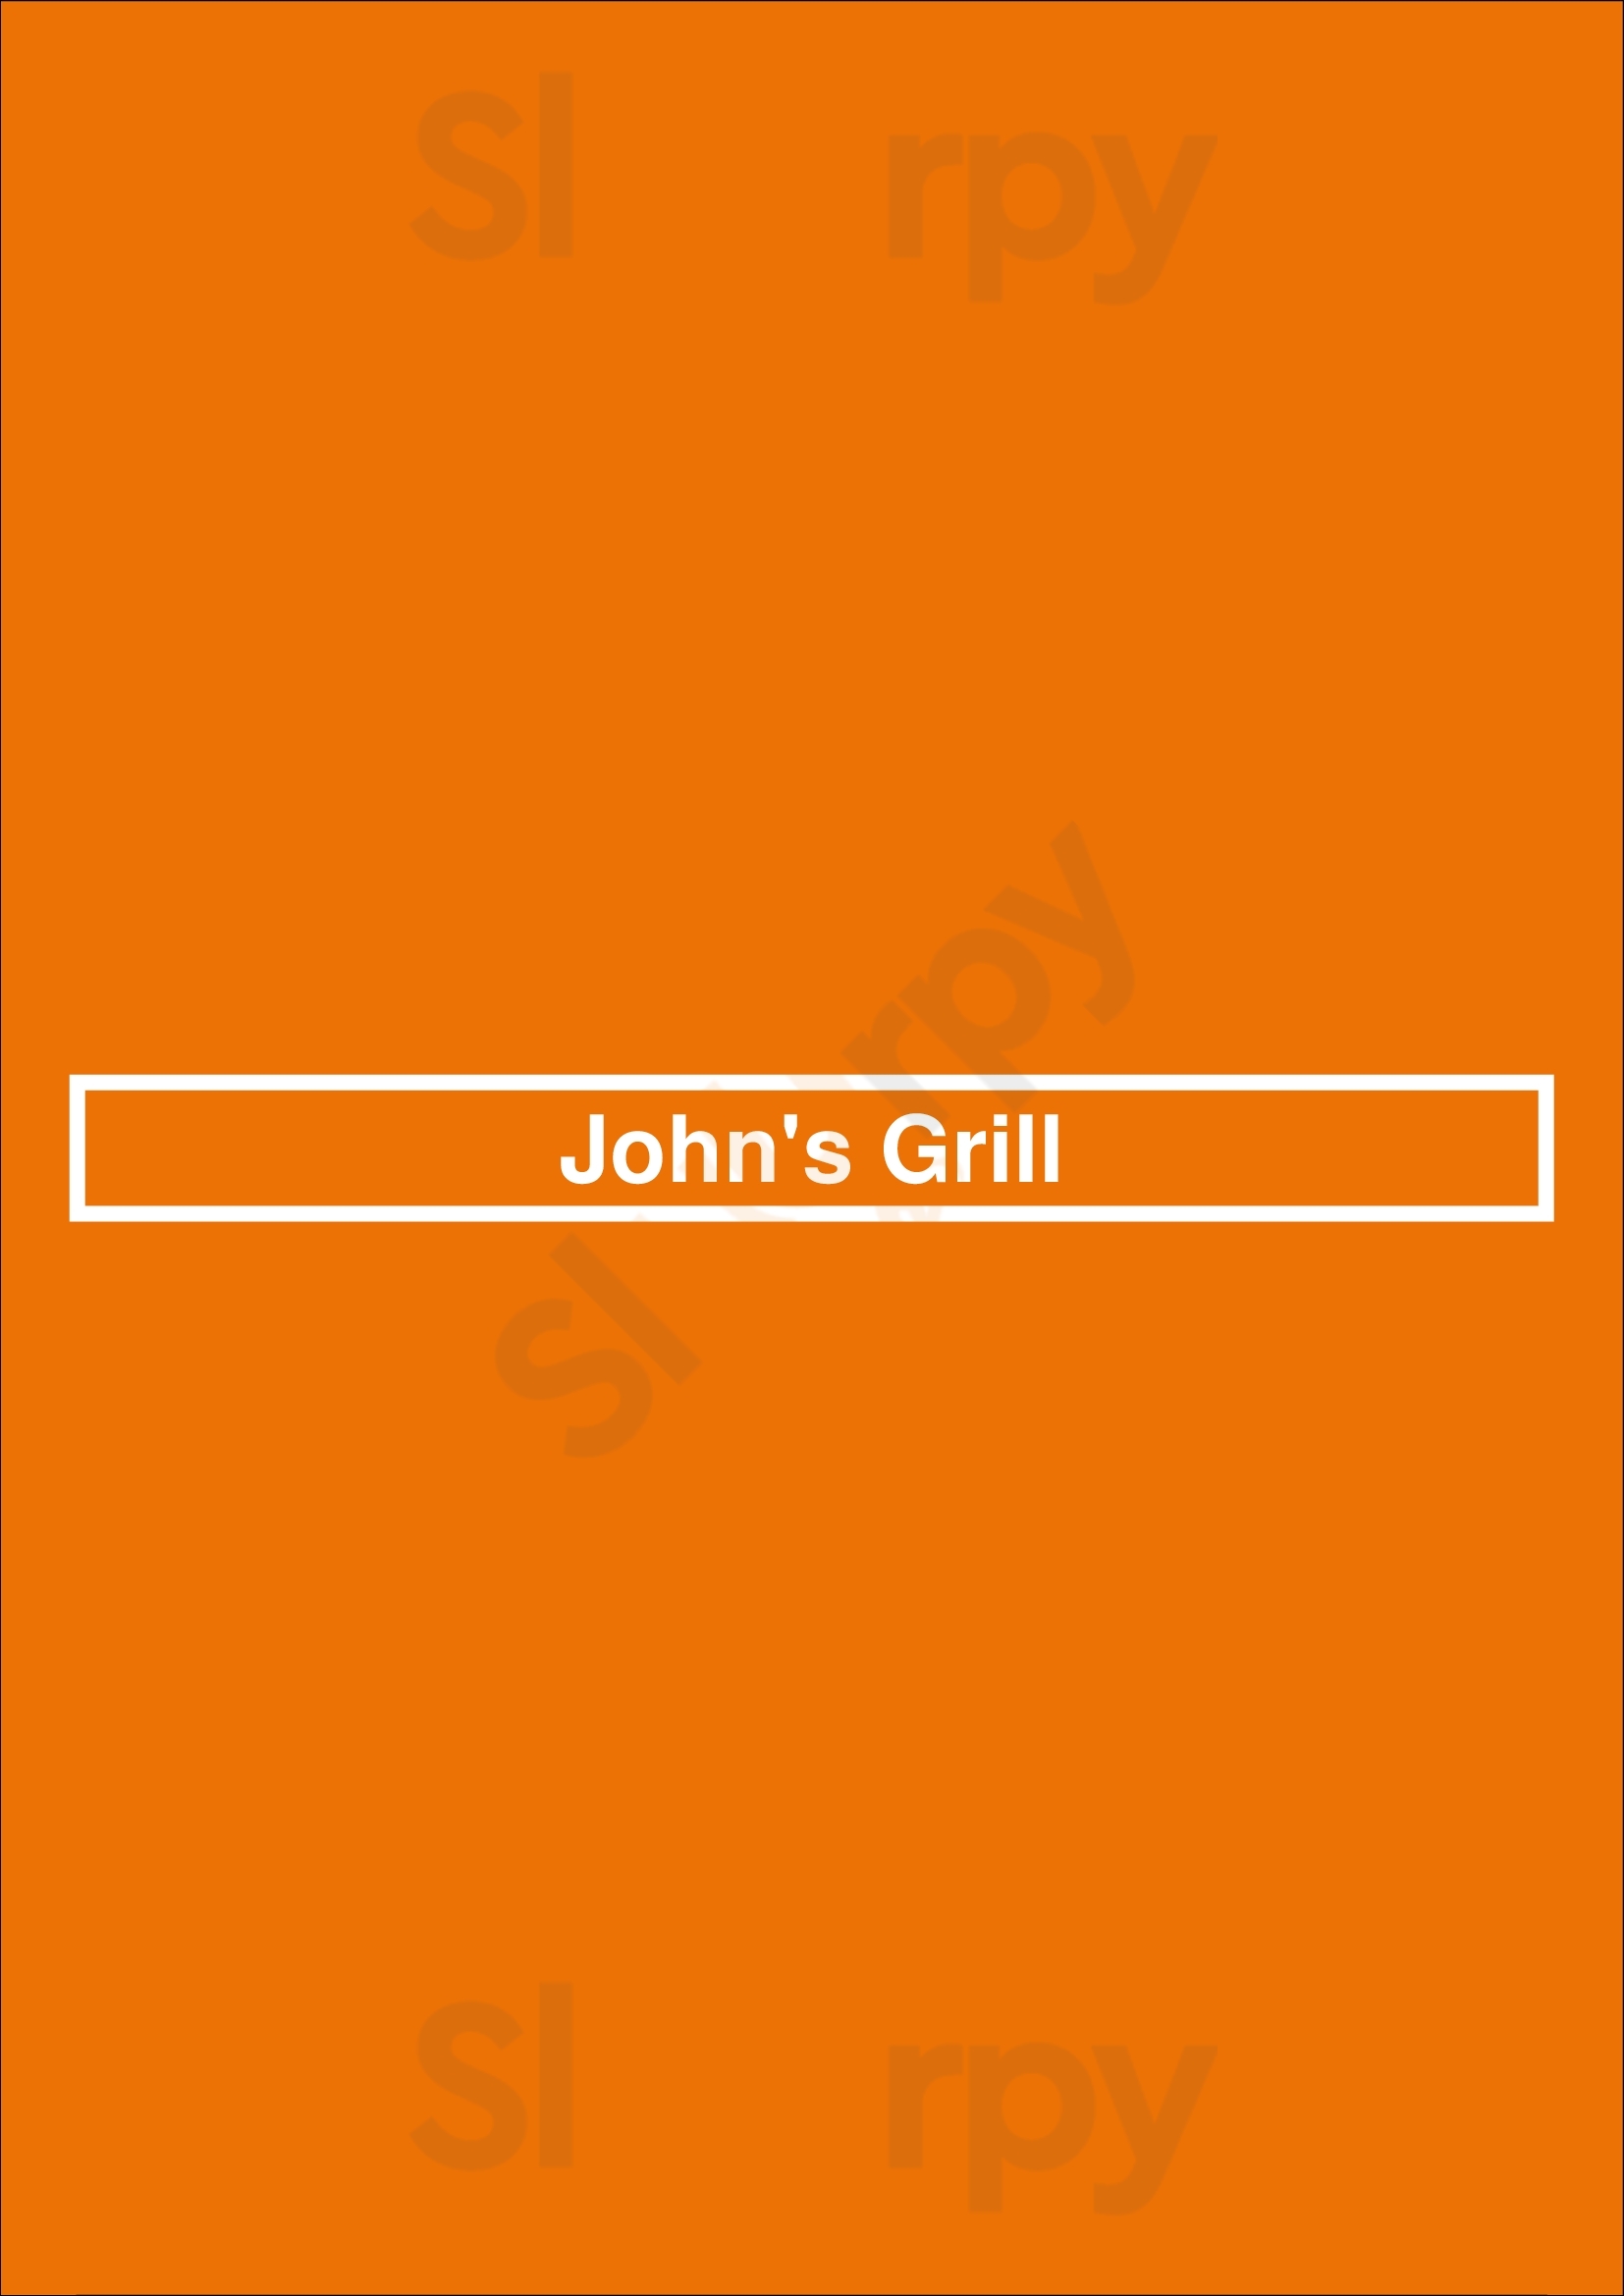 John's Grill San Francisco Menu - 1